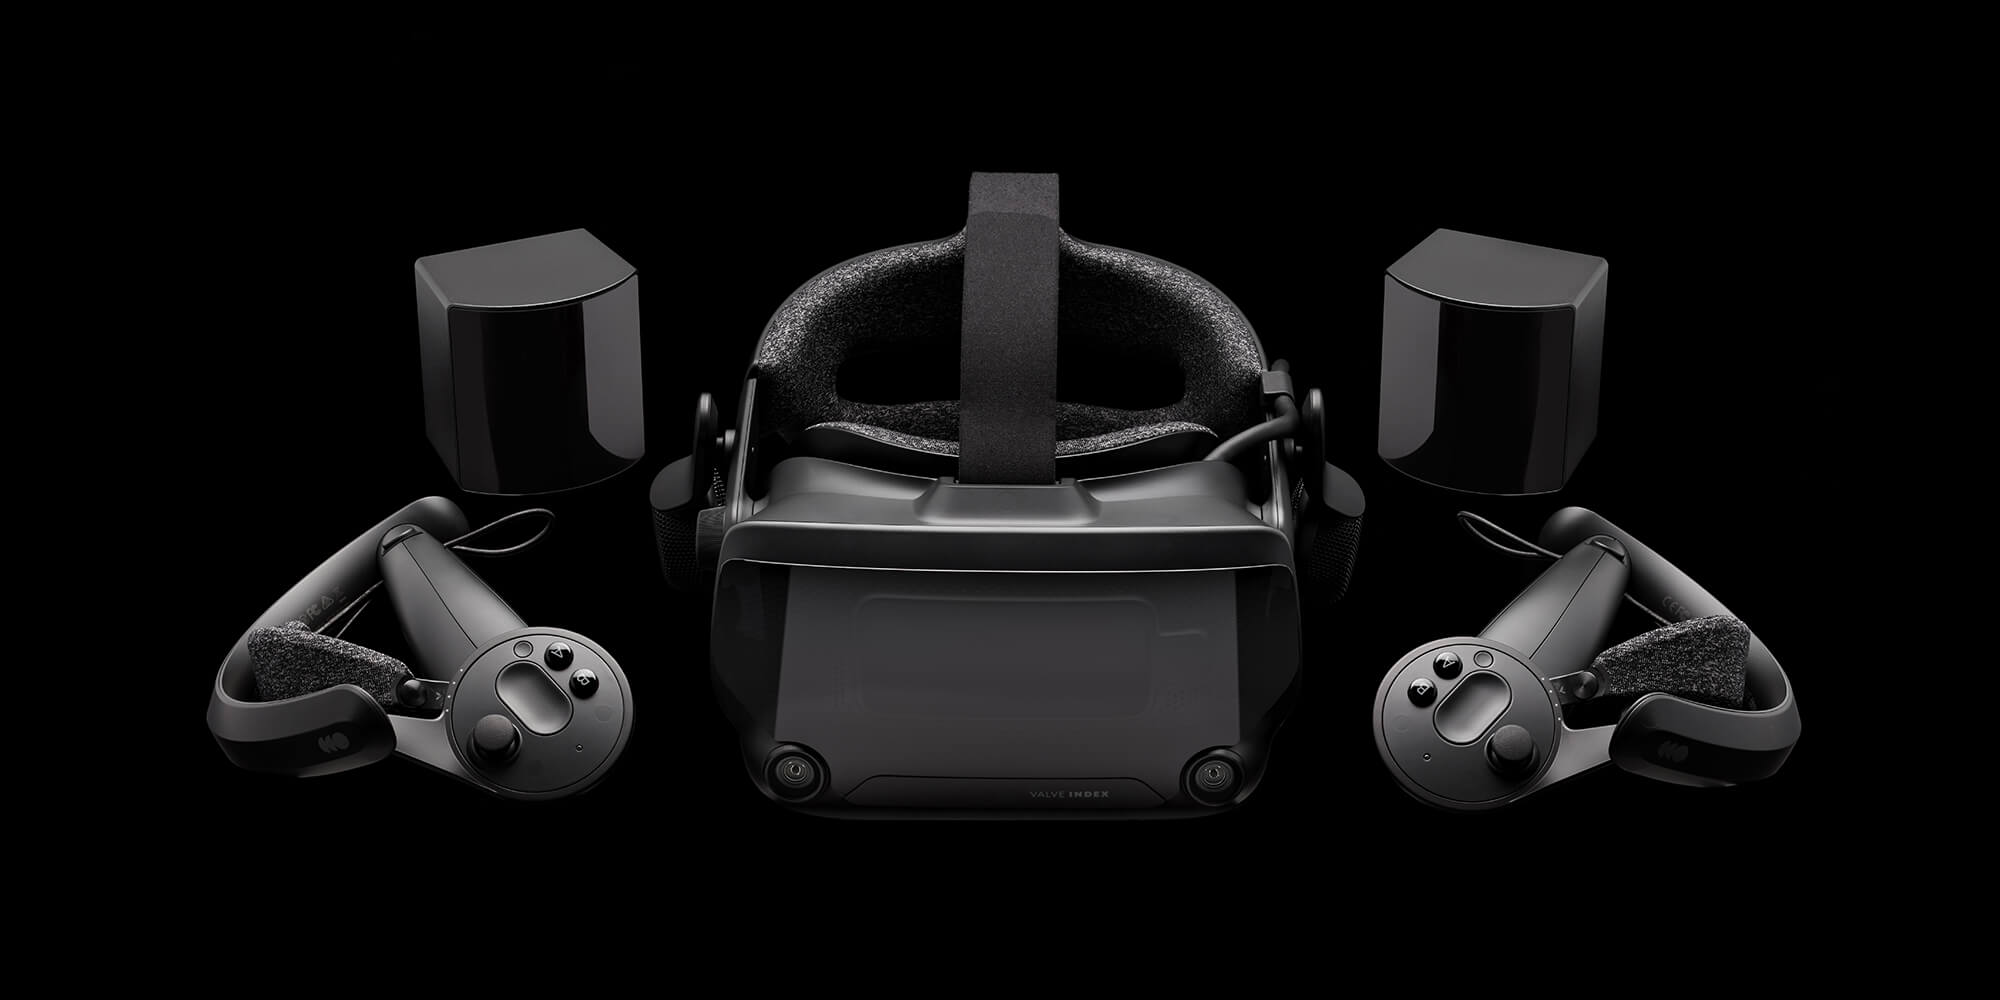 Valve Index virtual reality headset